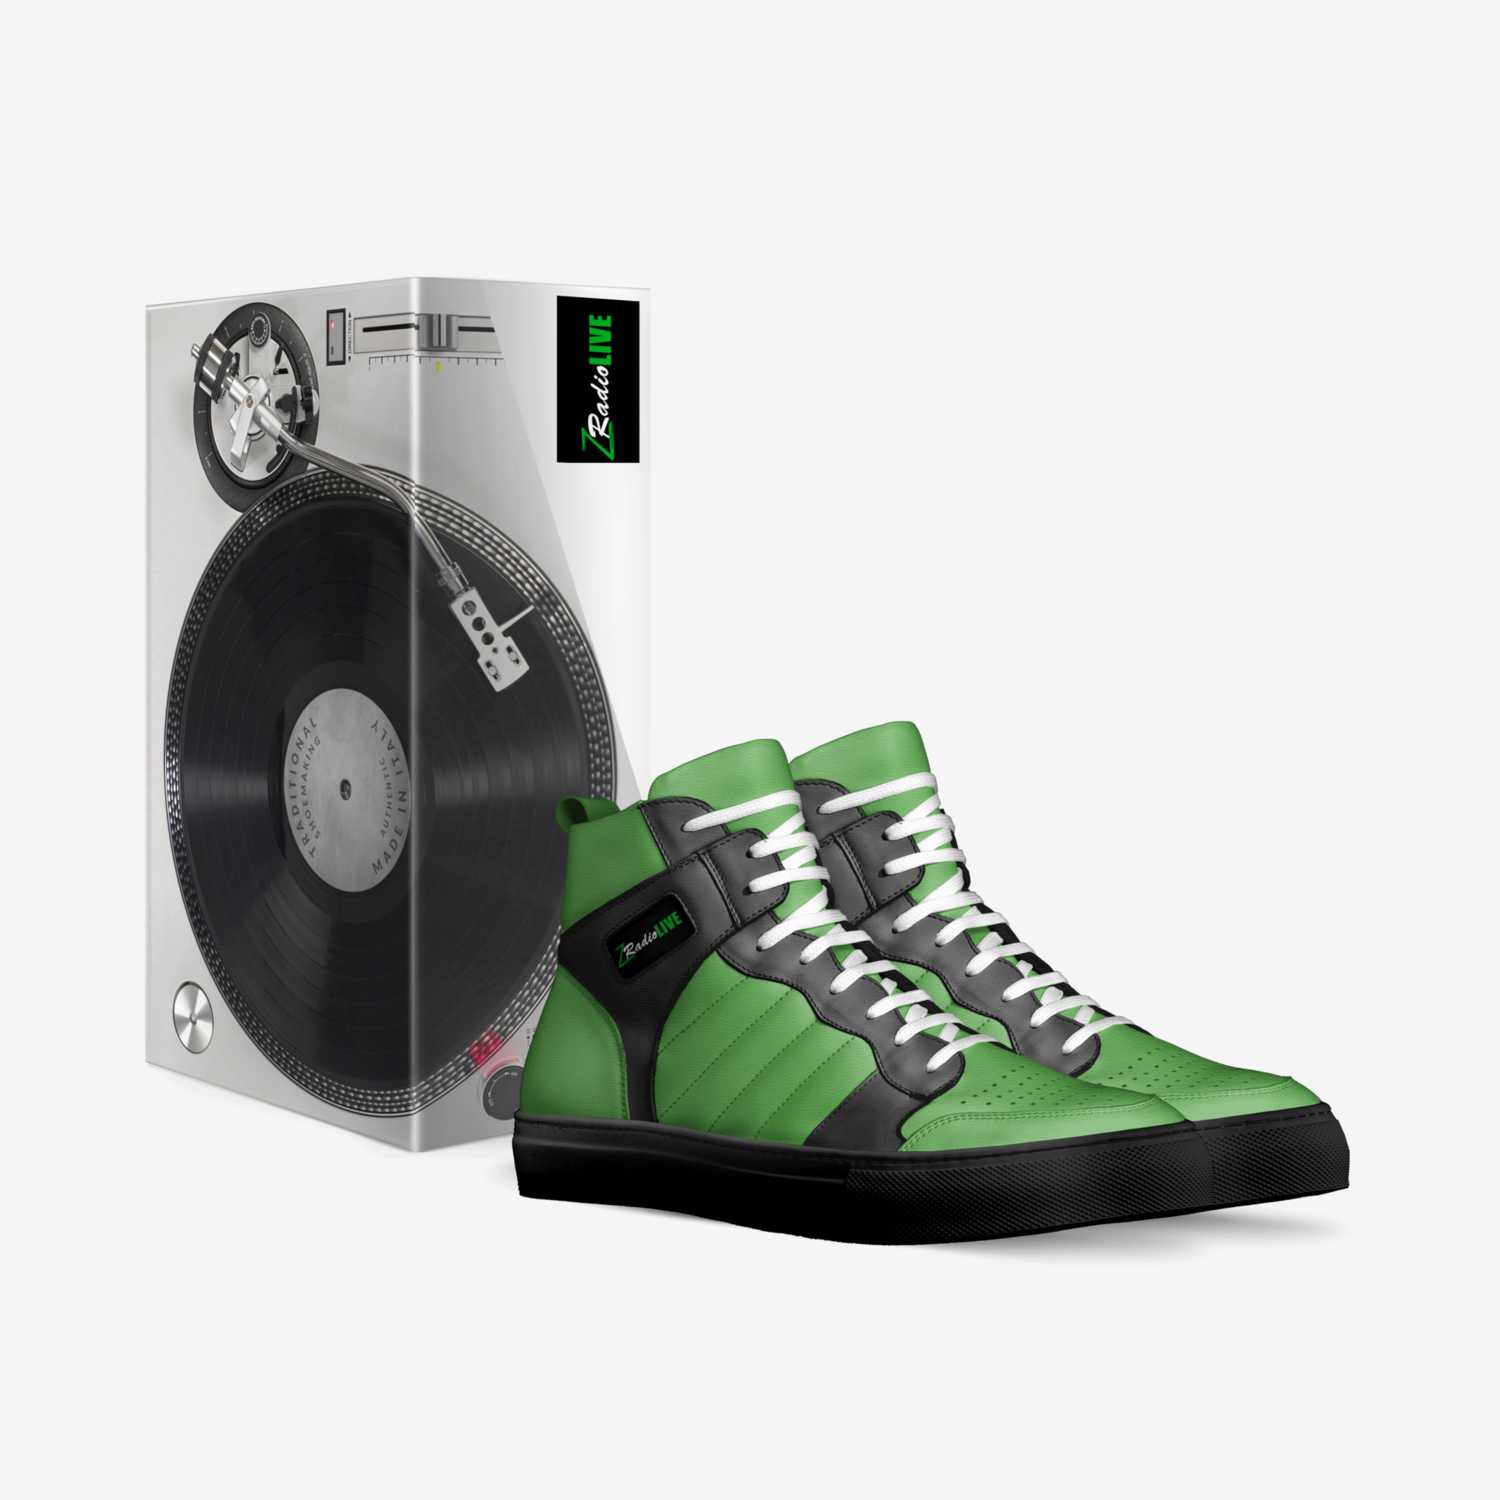 Z Radio Live custom made in Italy shoes by Zach Feldman | Box view